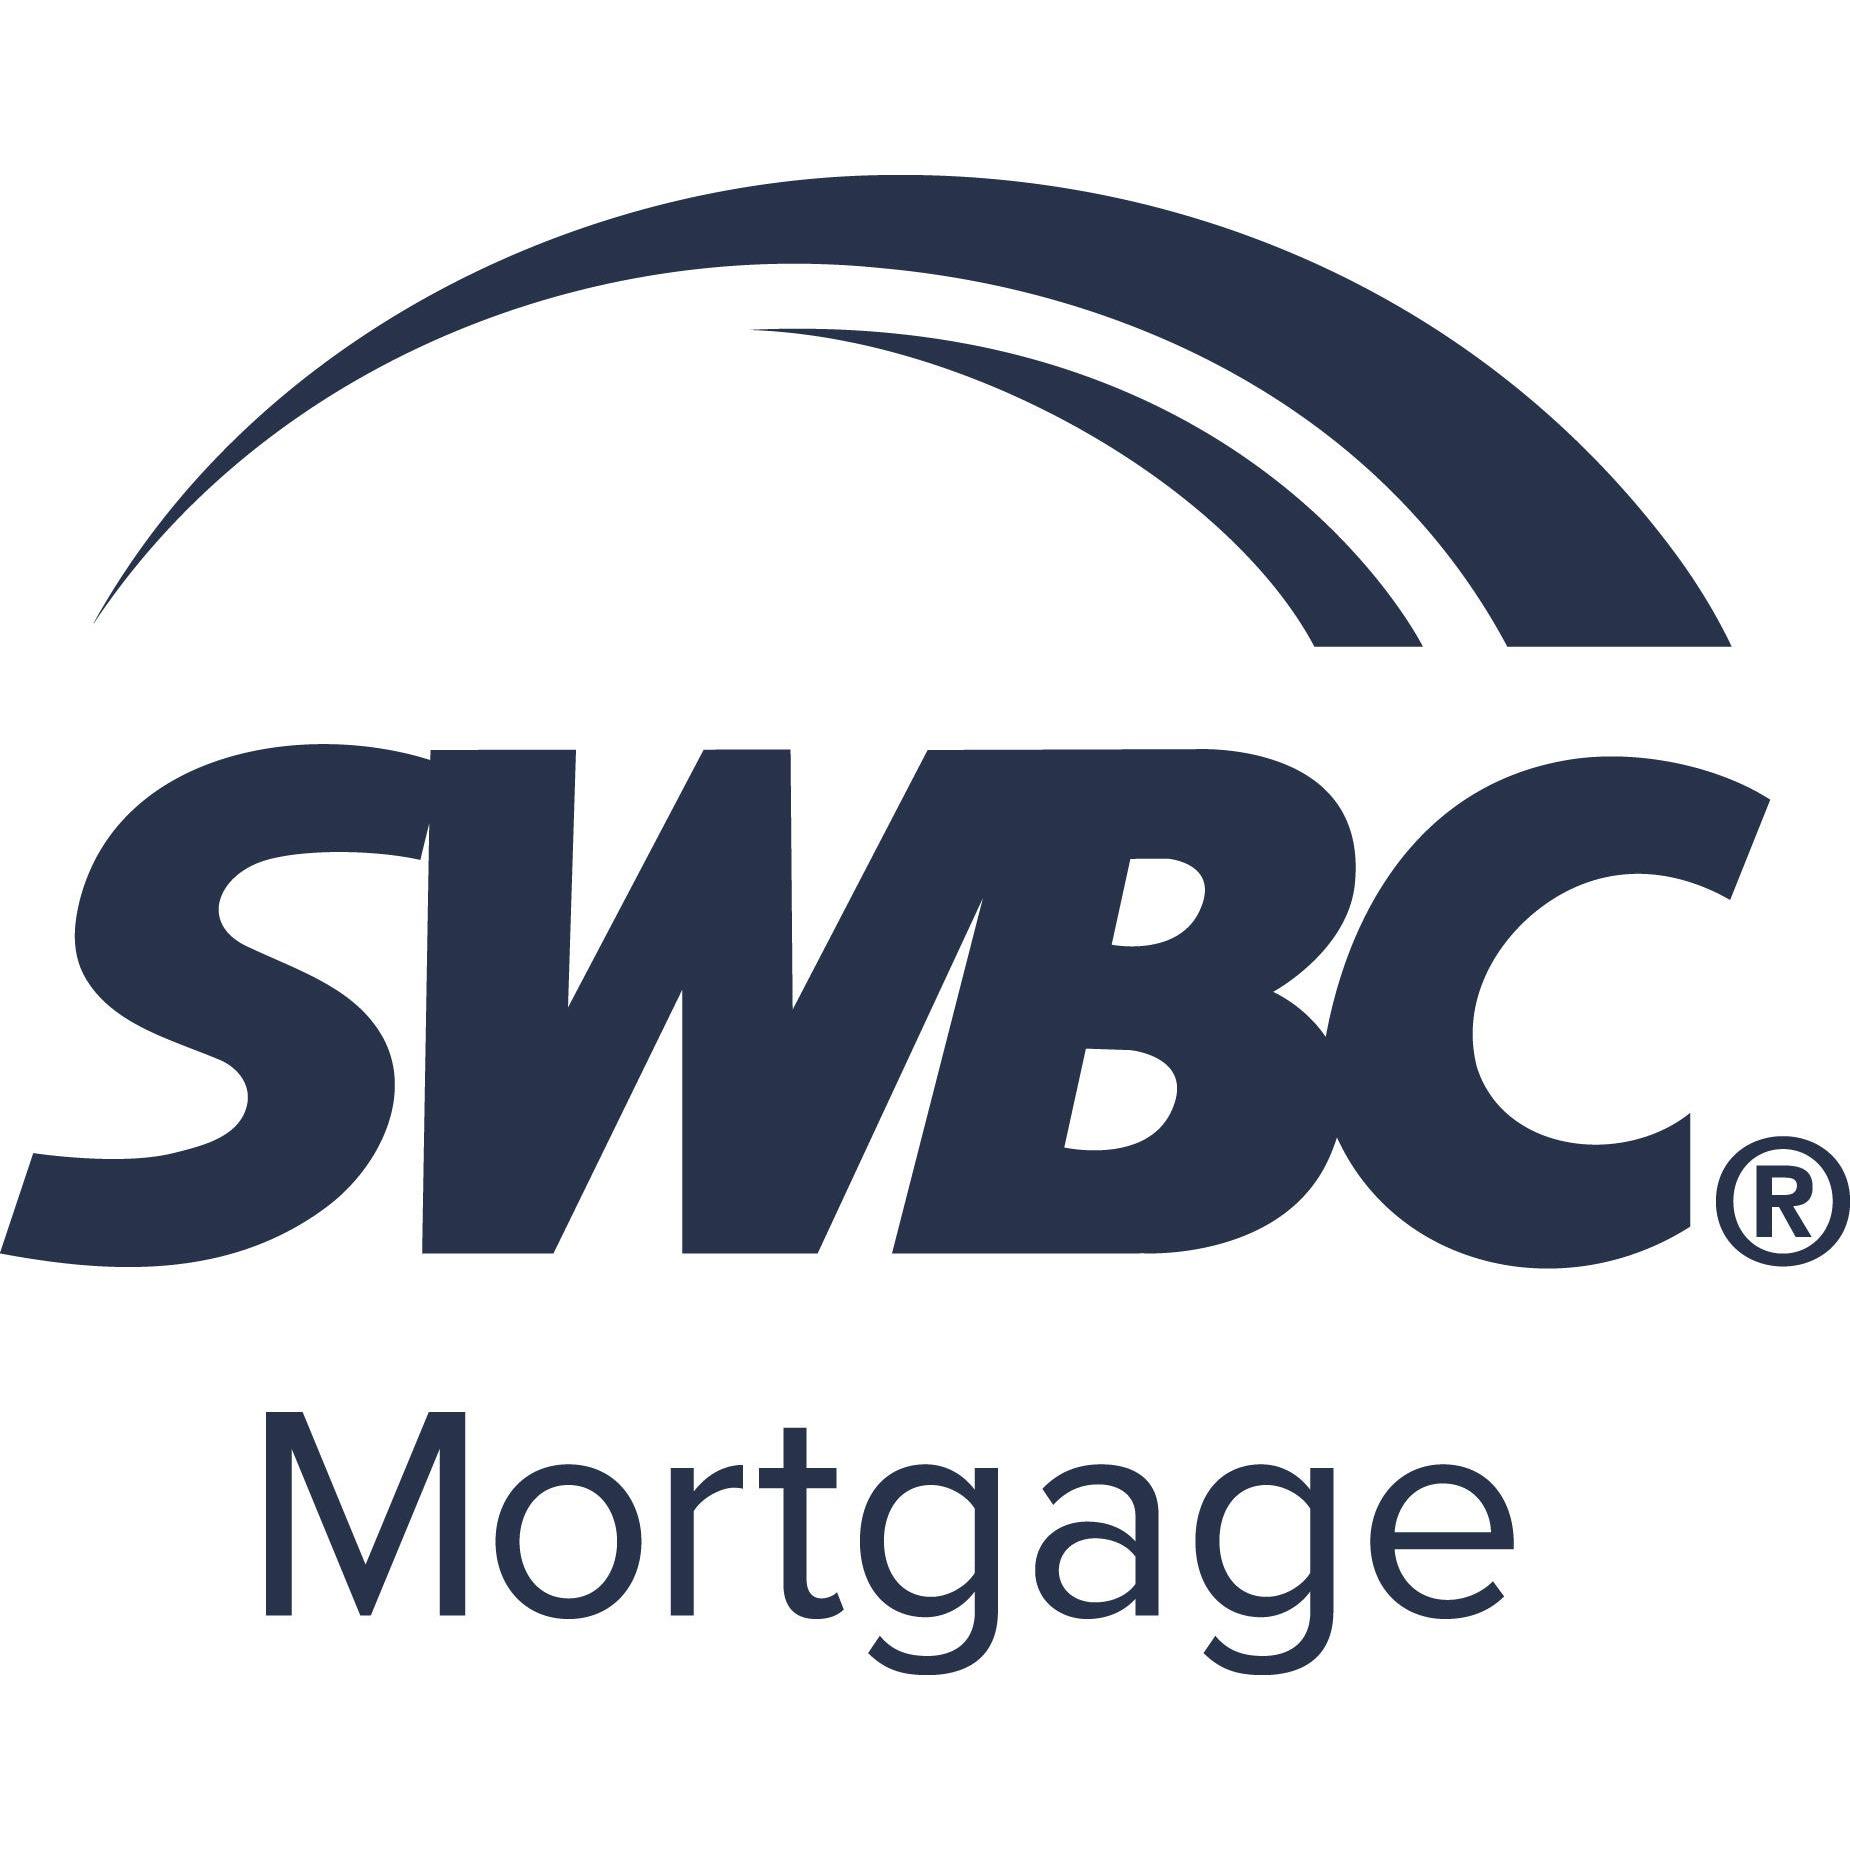 Brad Poe, SWBC Mortgage - Brentwood, TN 37027 - (615)319-6194 | ShowMeLocal.com